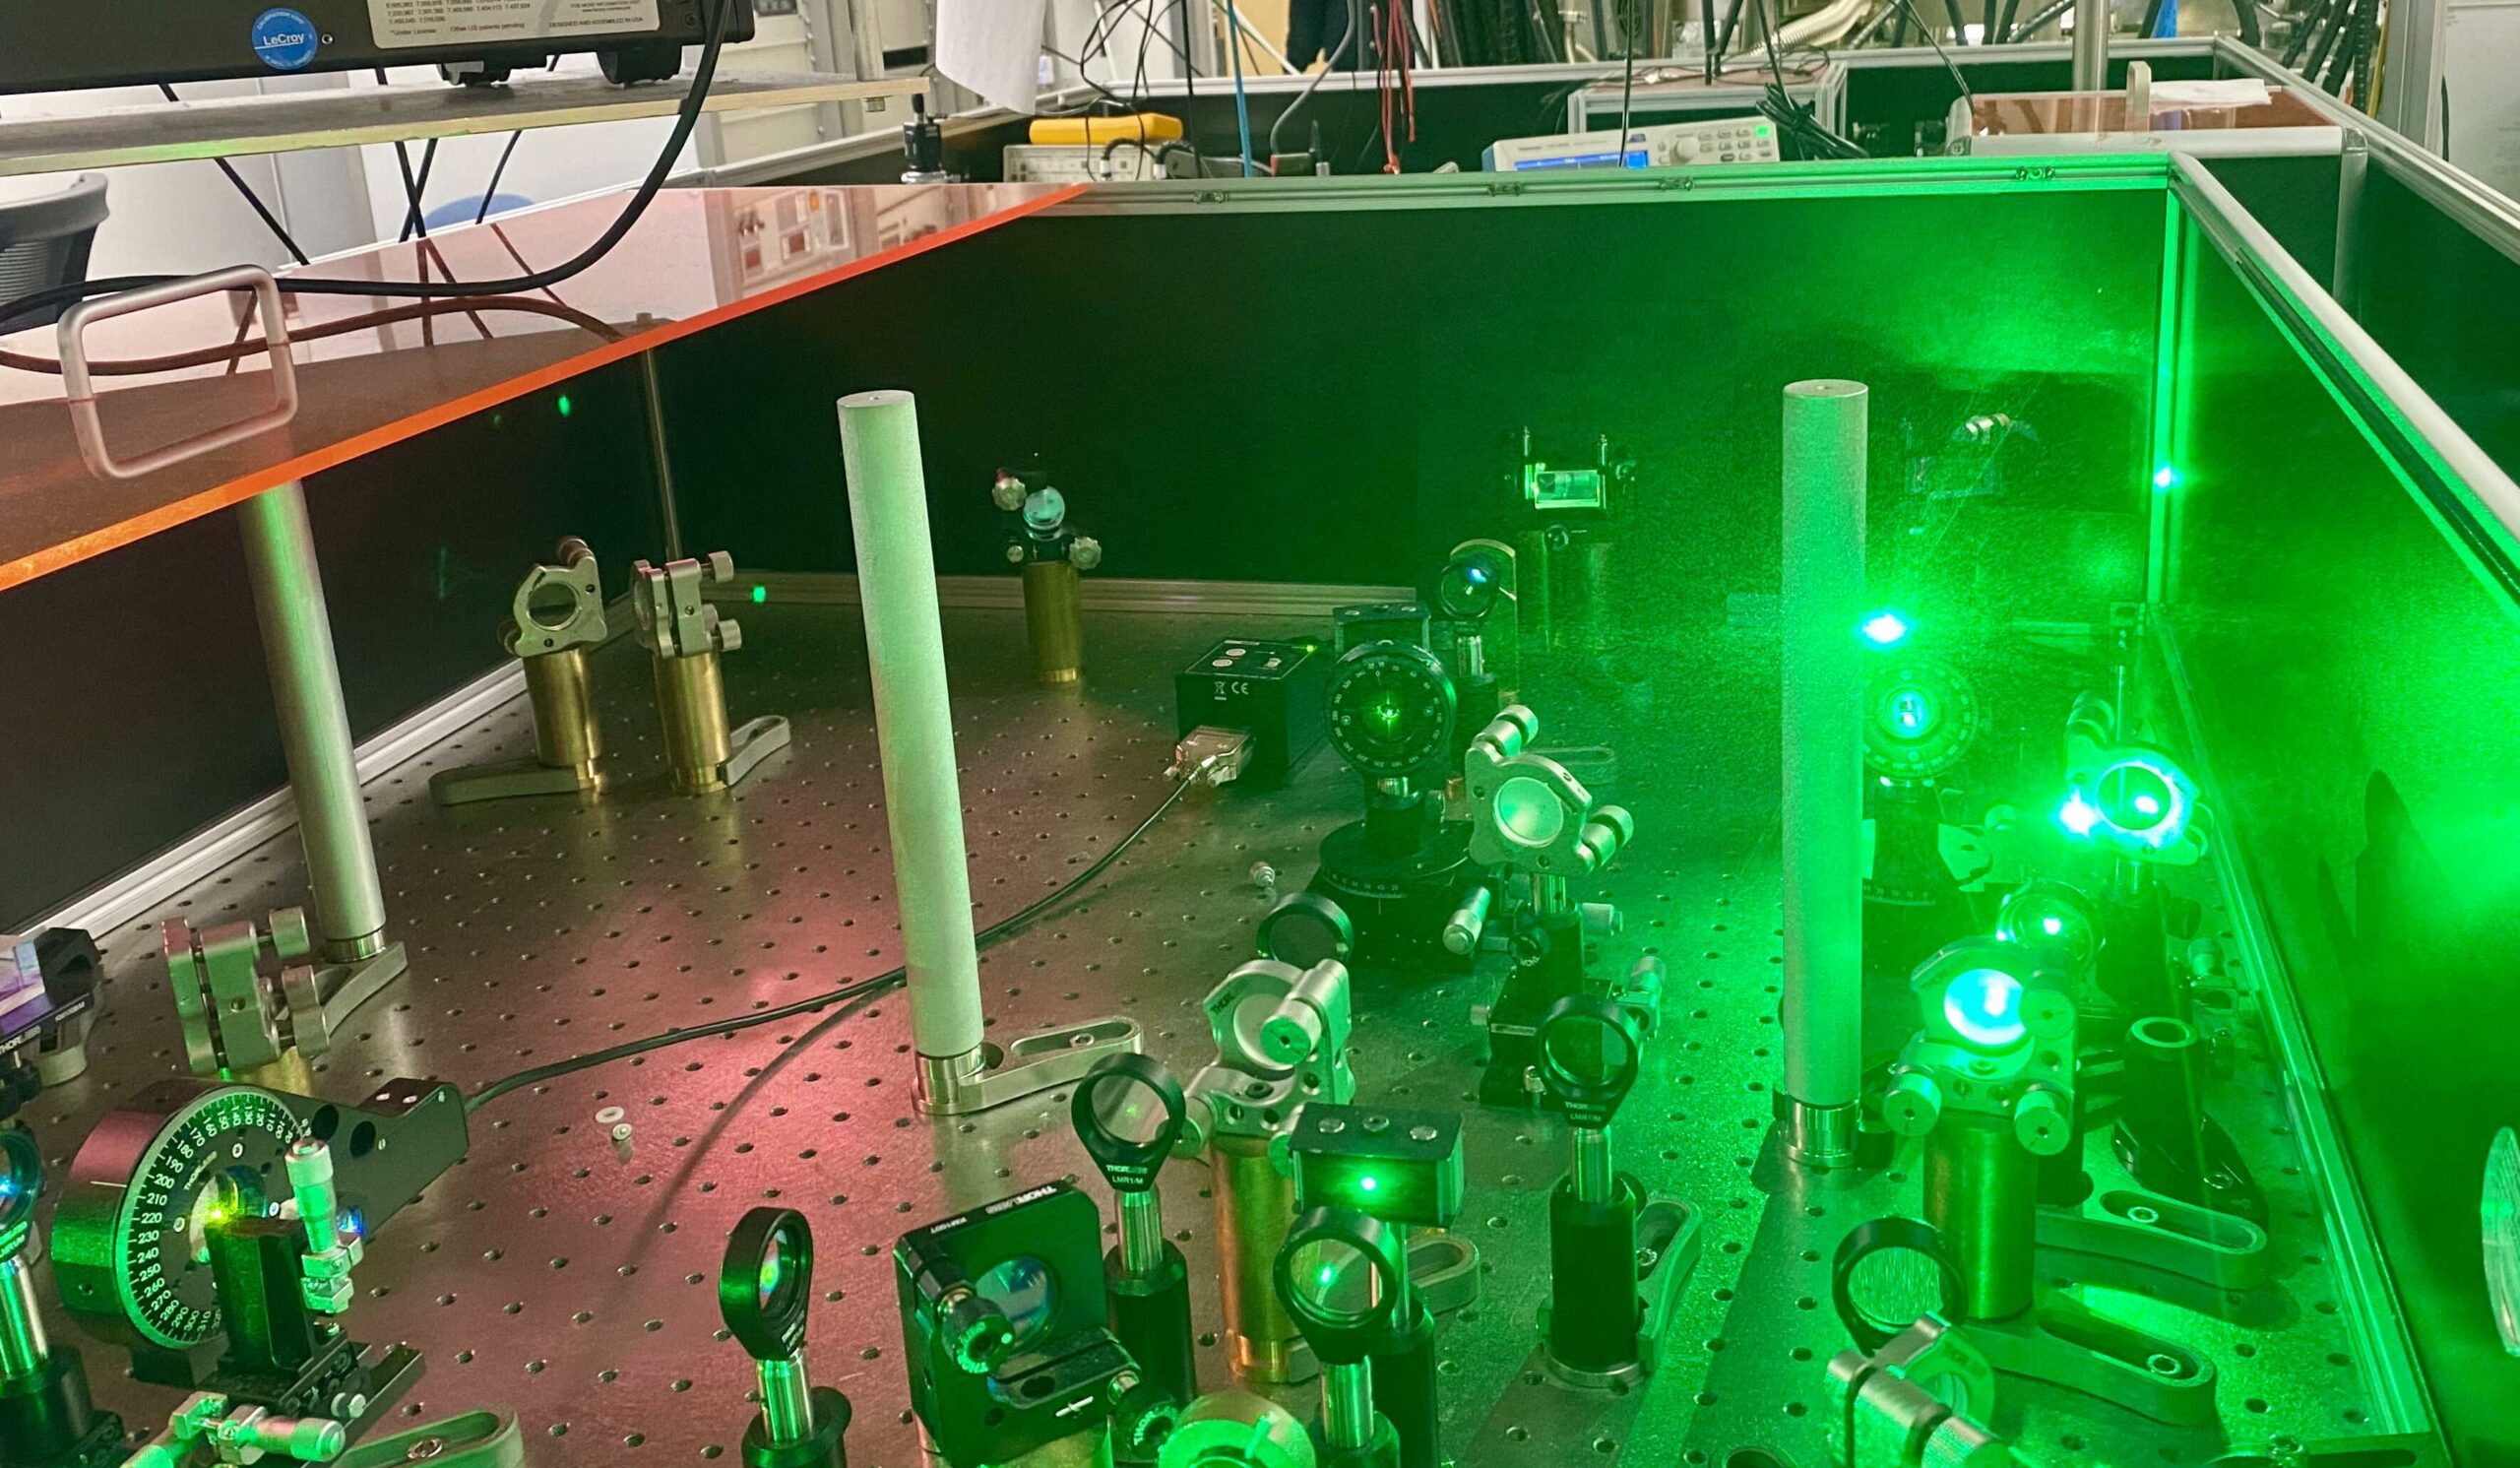 University of Pittsburgh laser